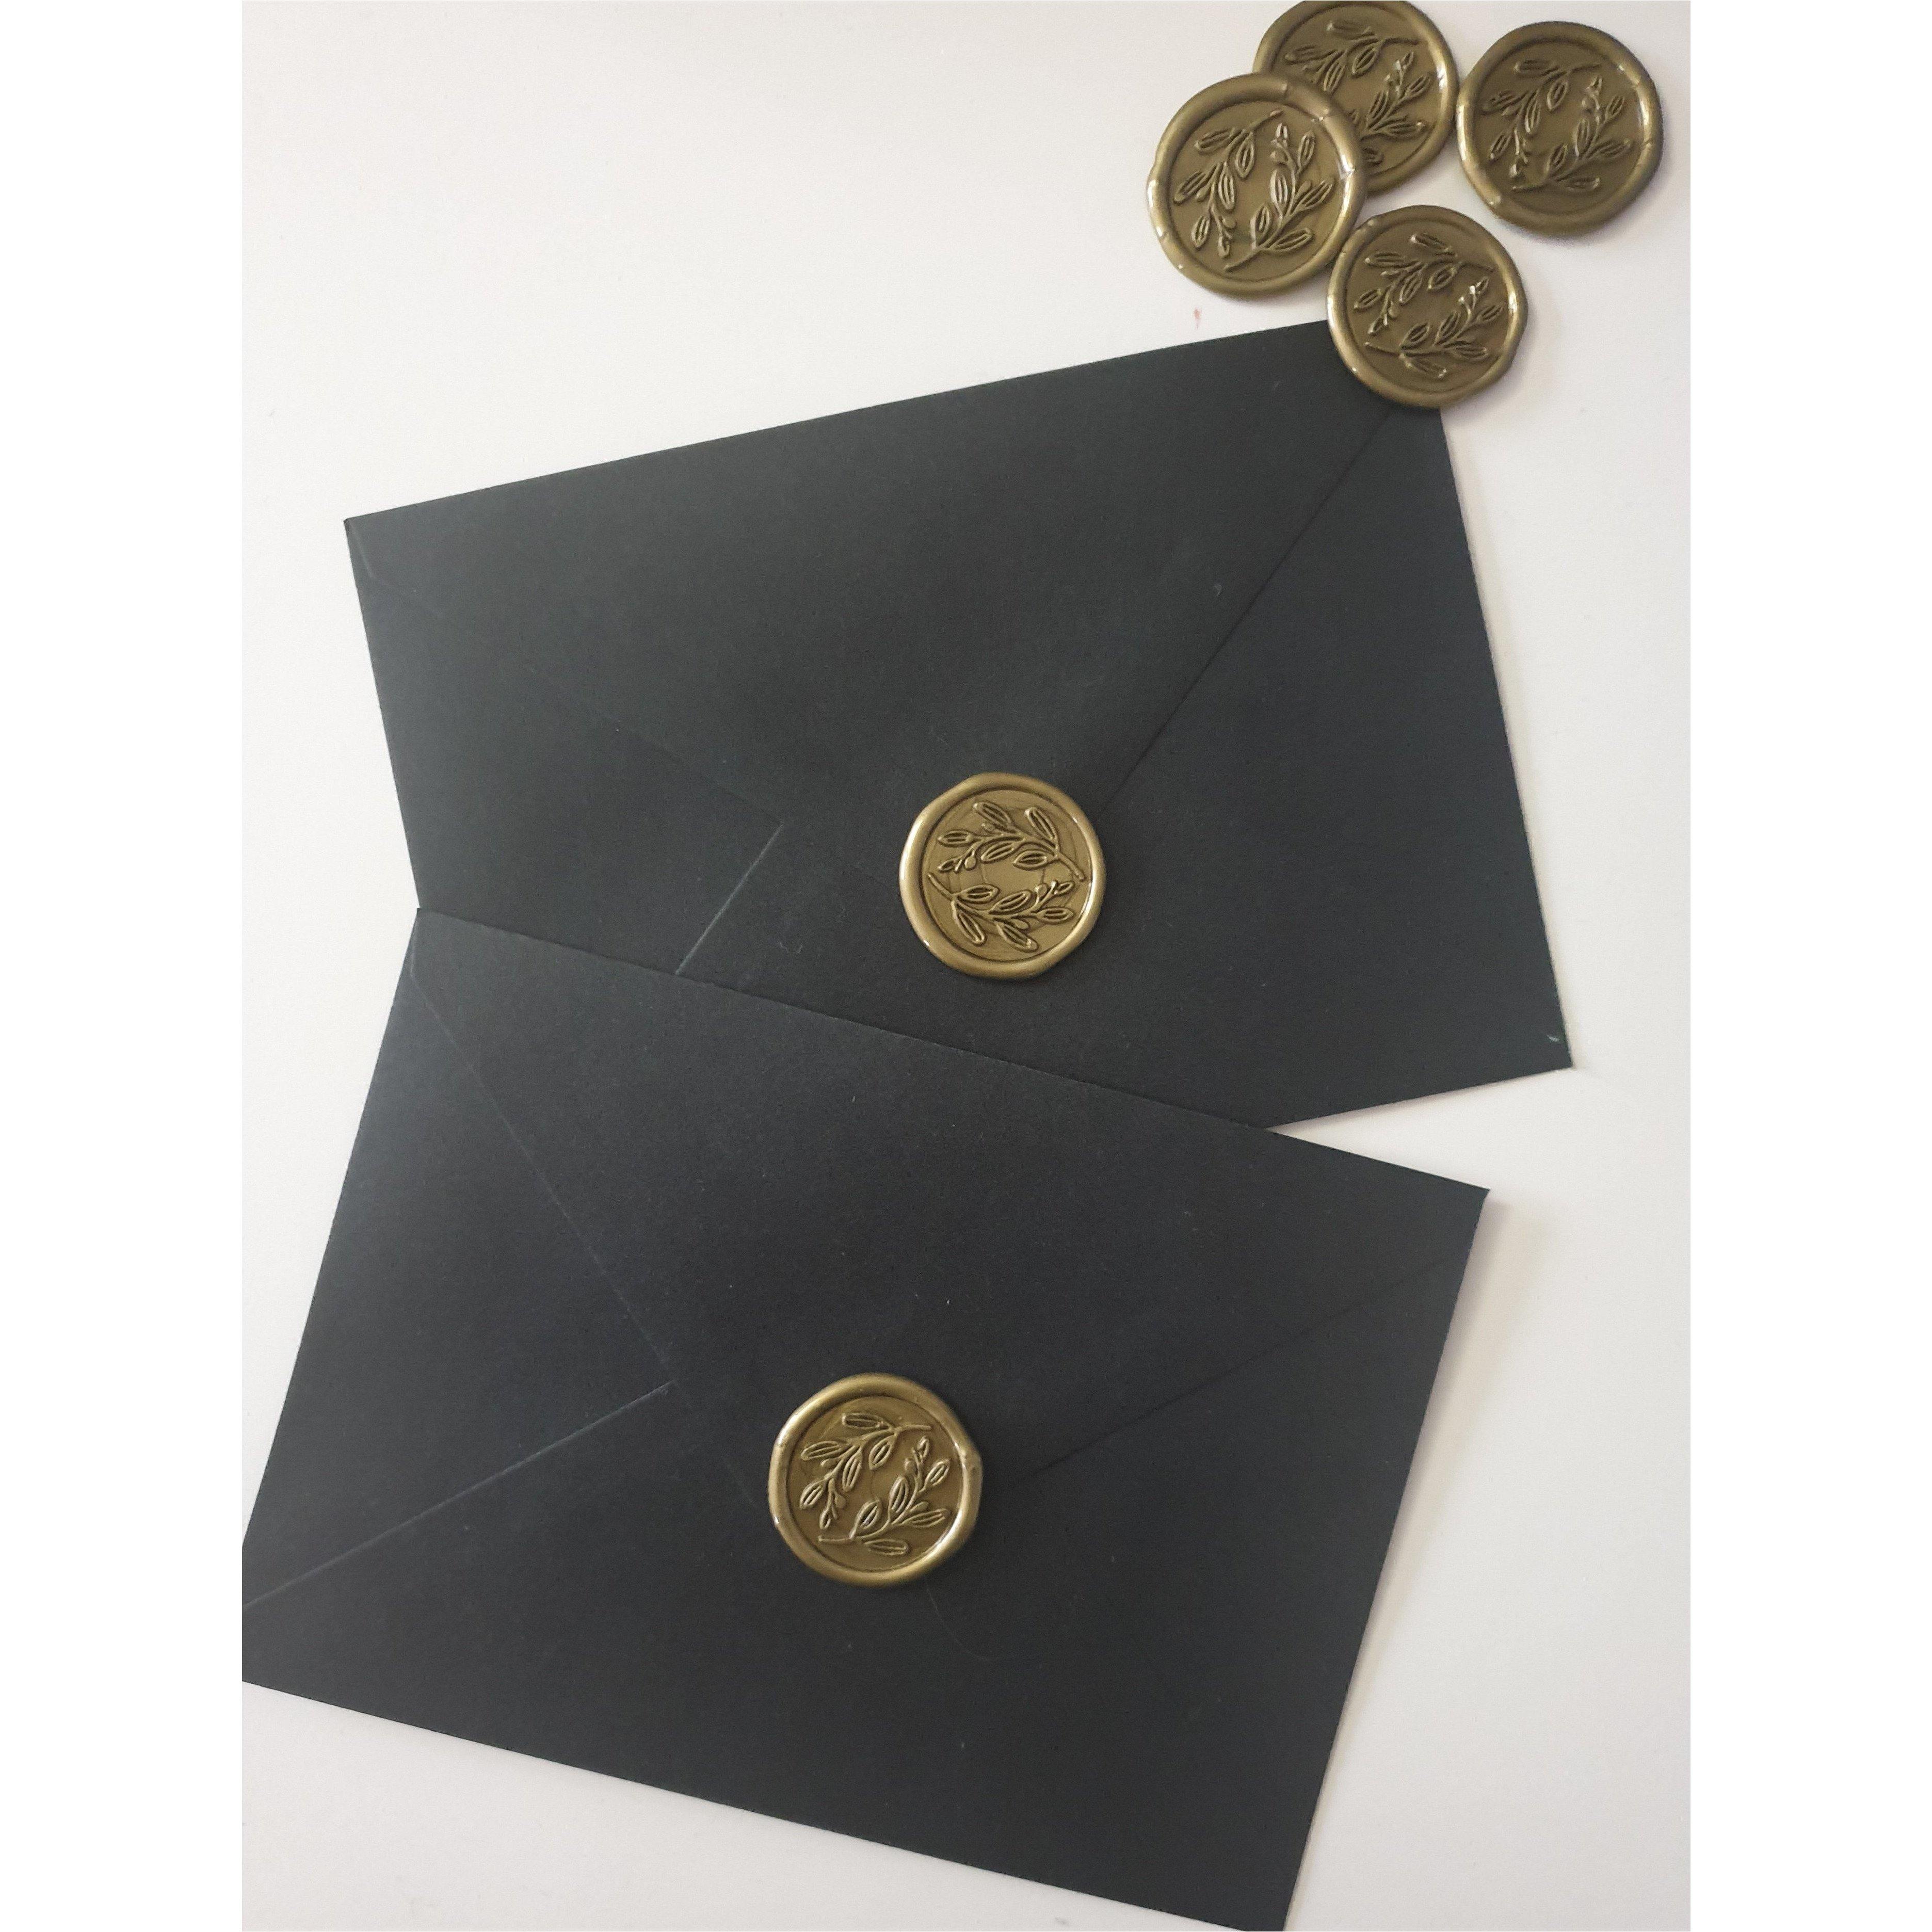 50 PCS EUCALYPTUS Leaf Wax Seal Stickers Light Gold Self-Adhesive